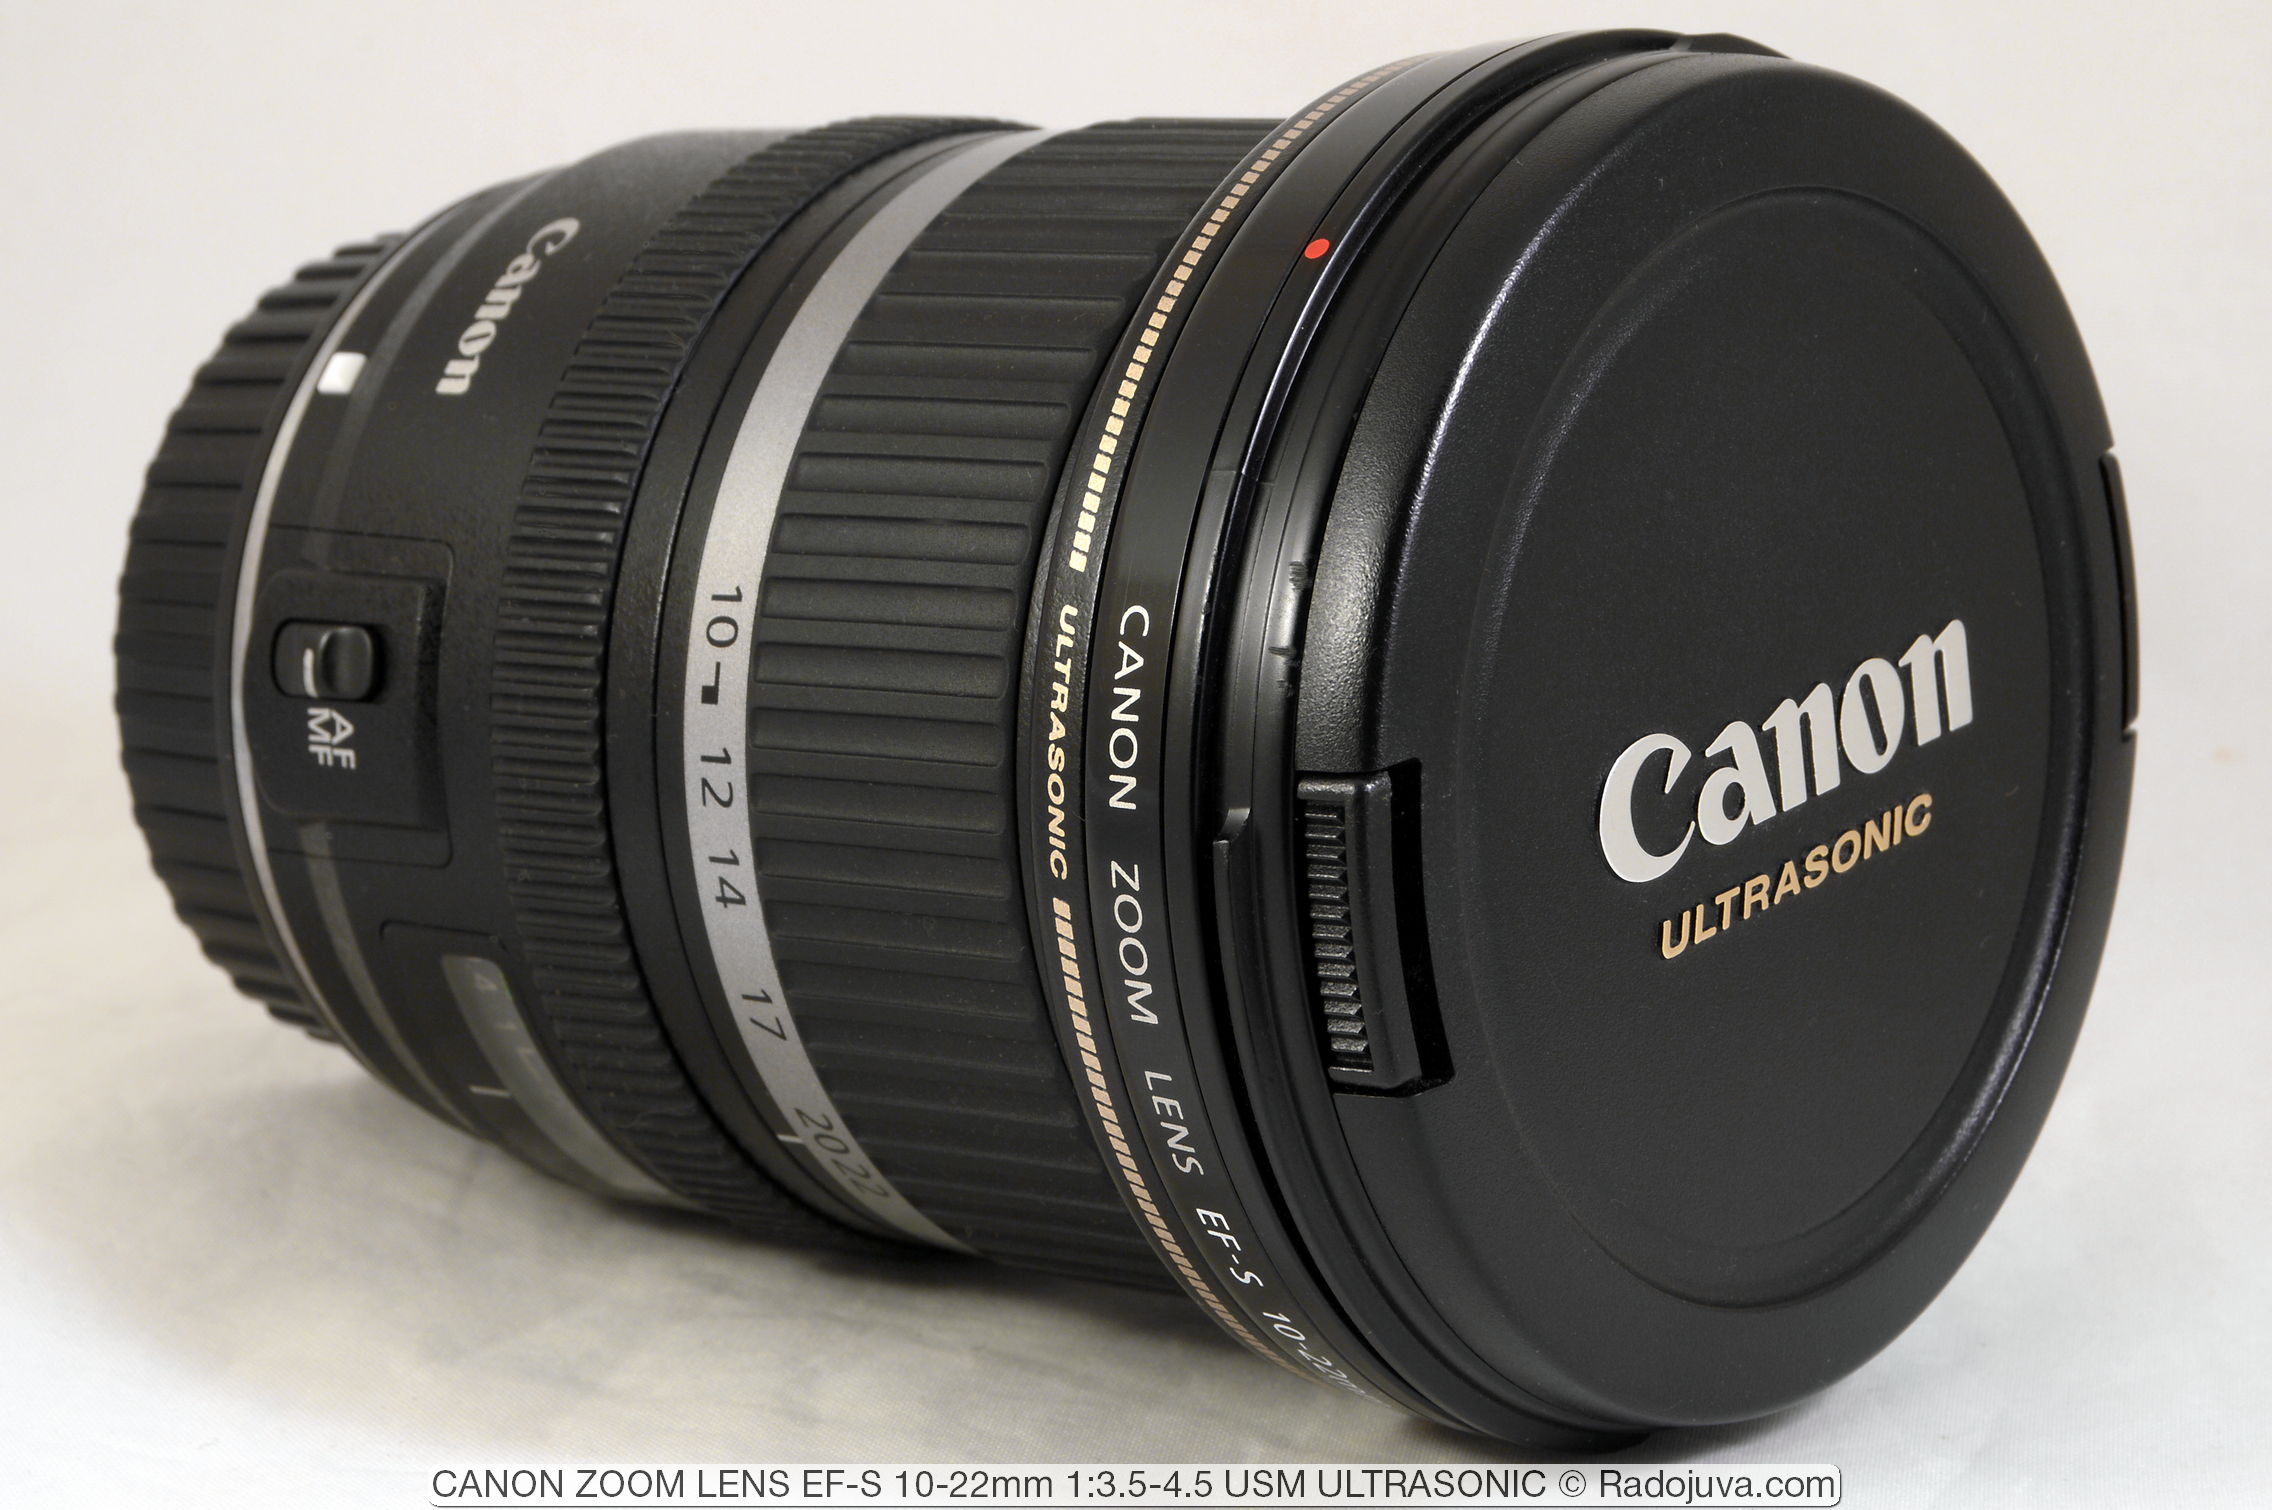 Canon Zoom Lens EF-S 10-22mm 1:3.5-4.5 USM ULTRASONIC